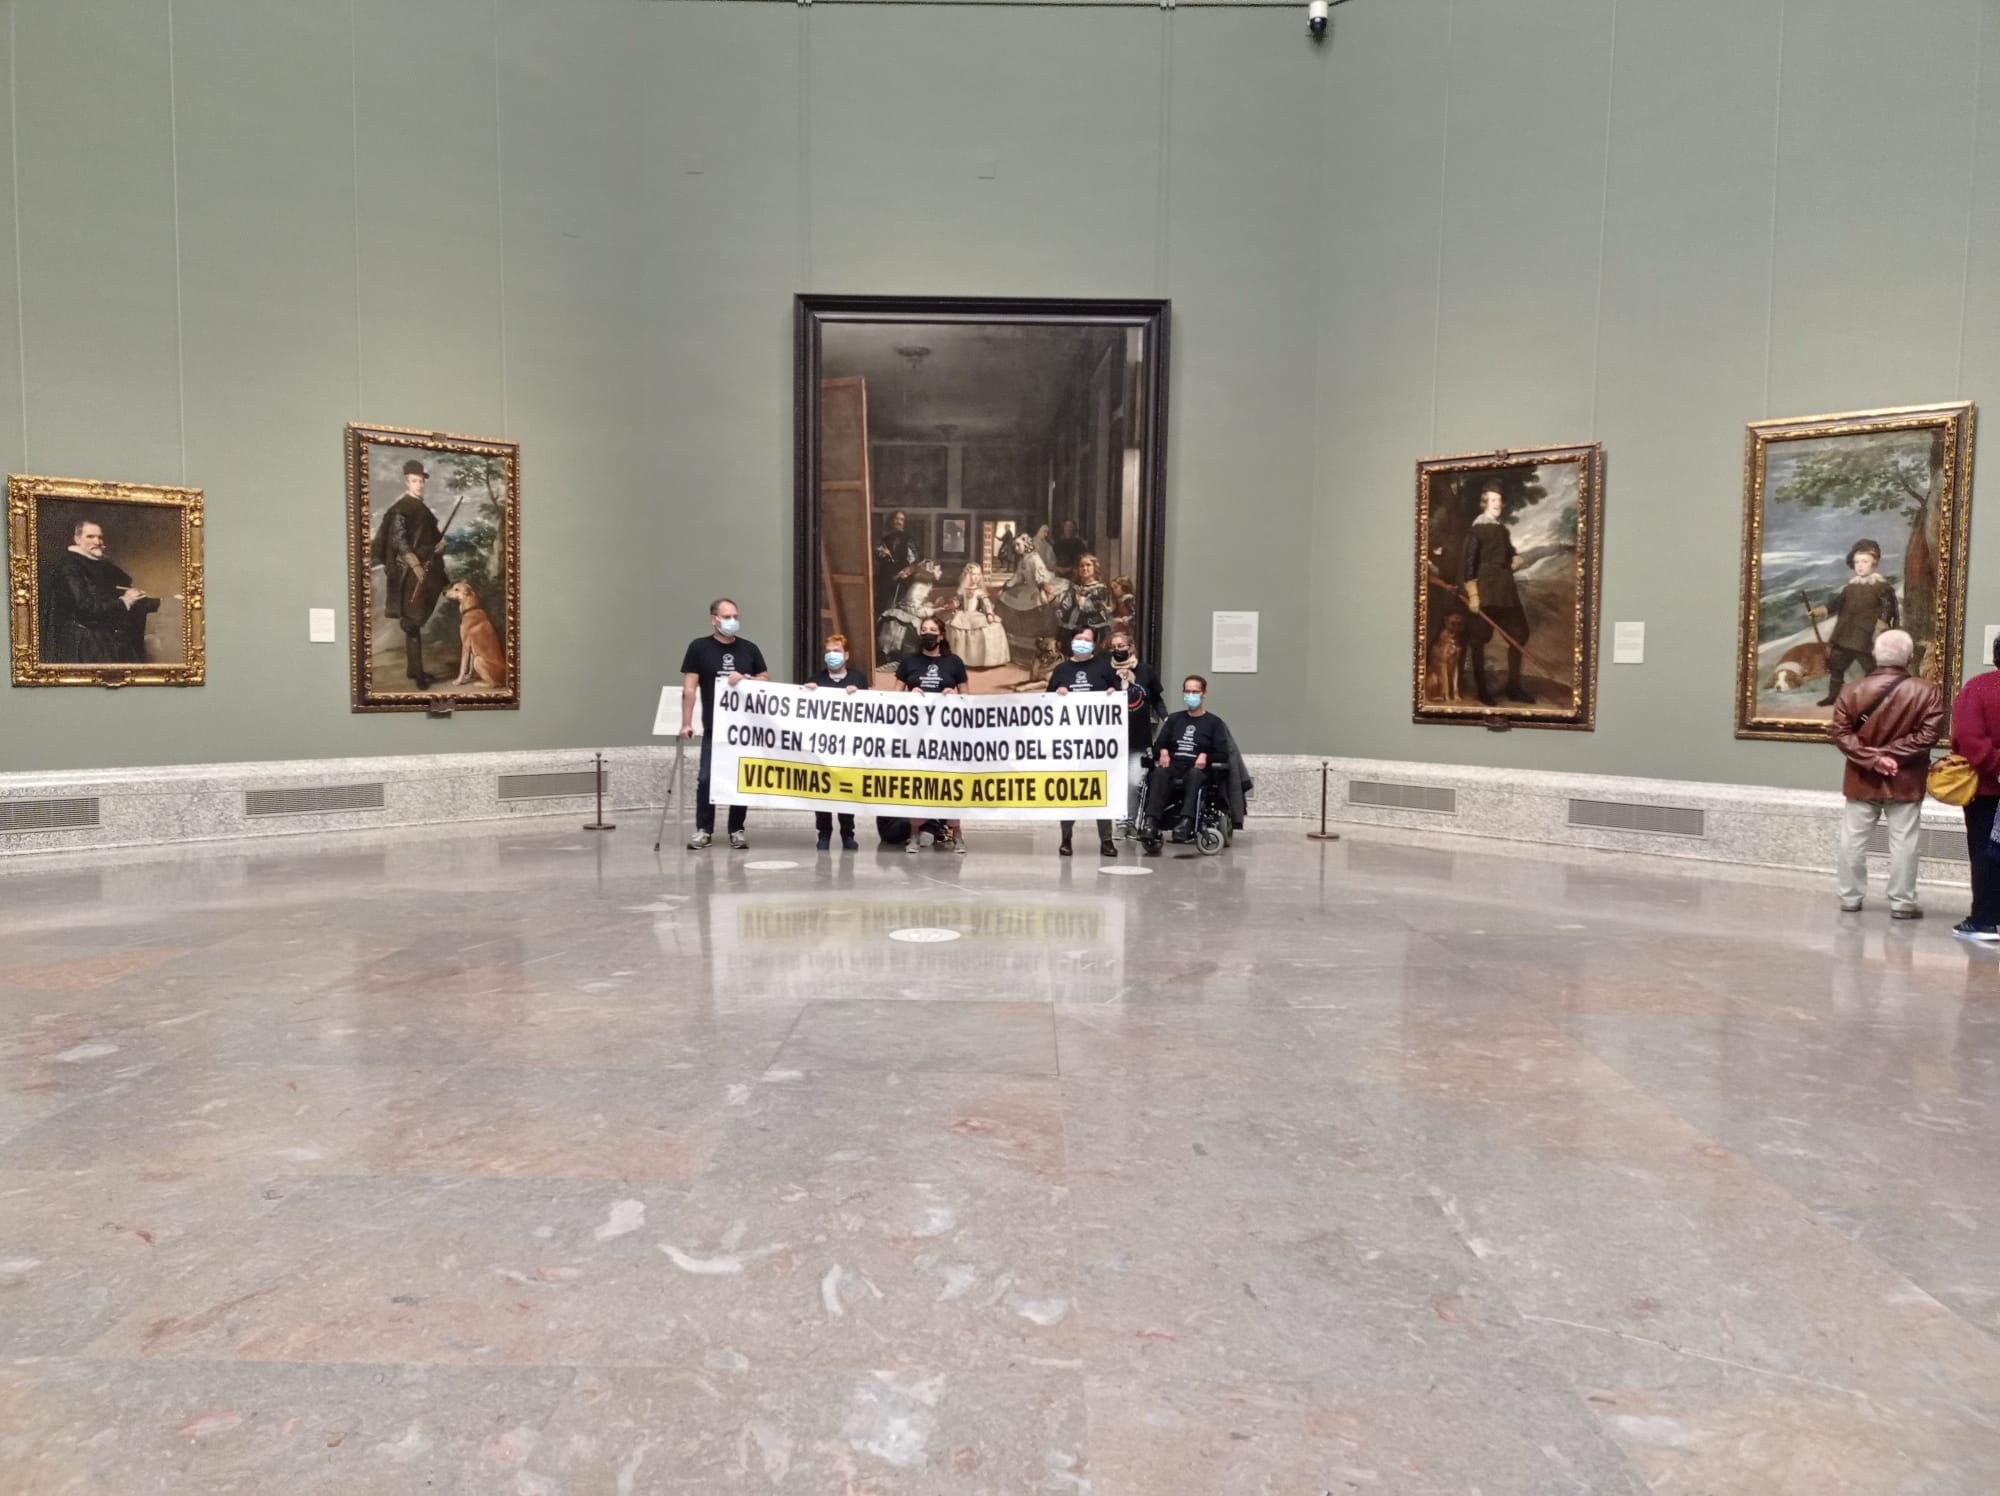 Spanish mass poisoning survivors occupy El Prado museum in Madrid